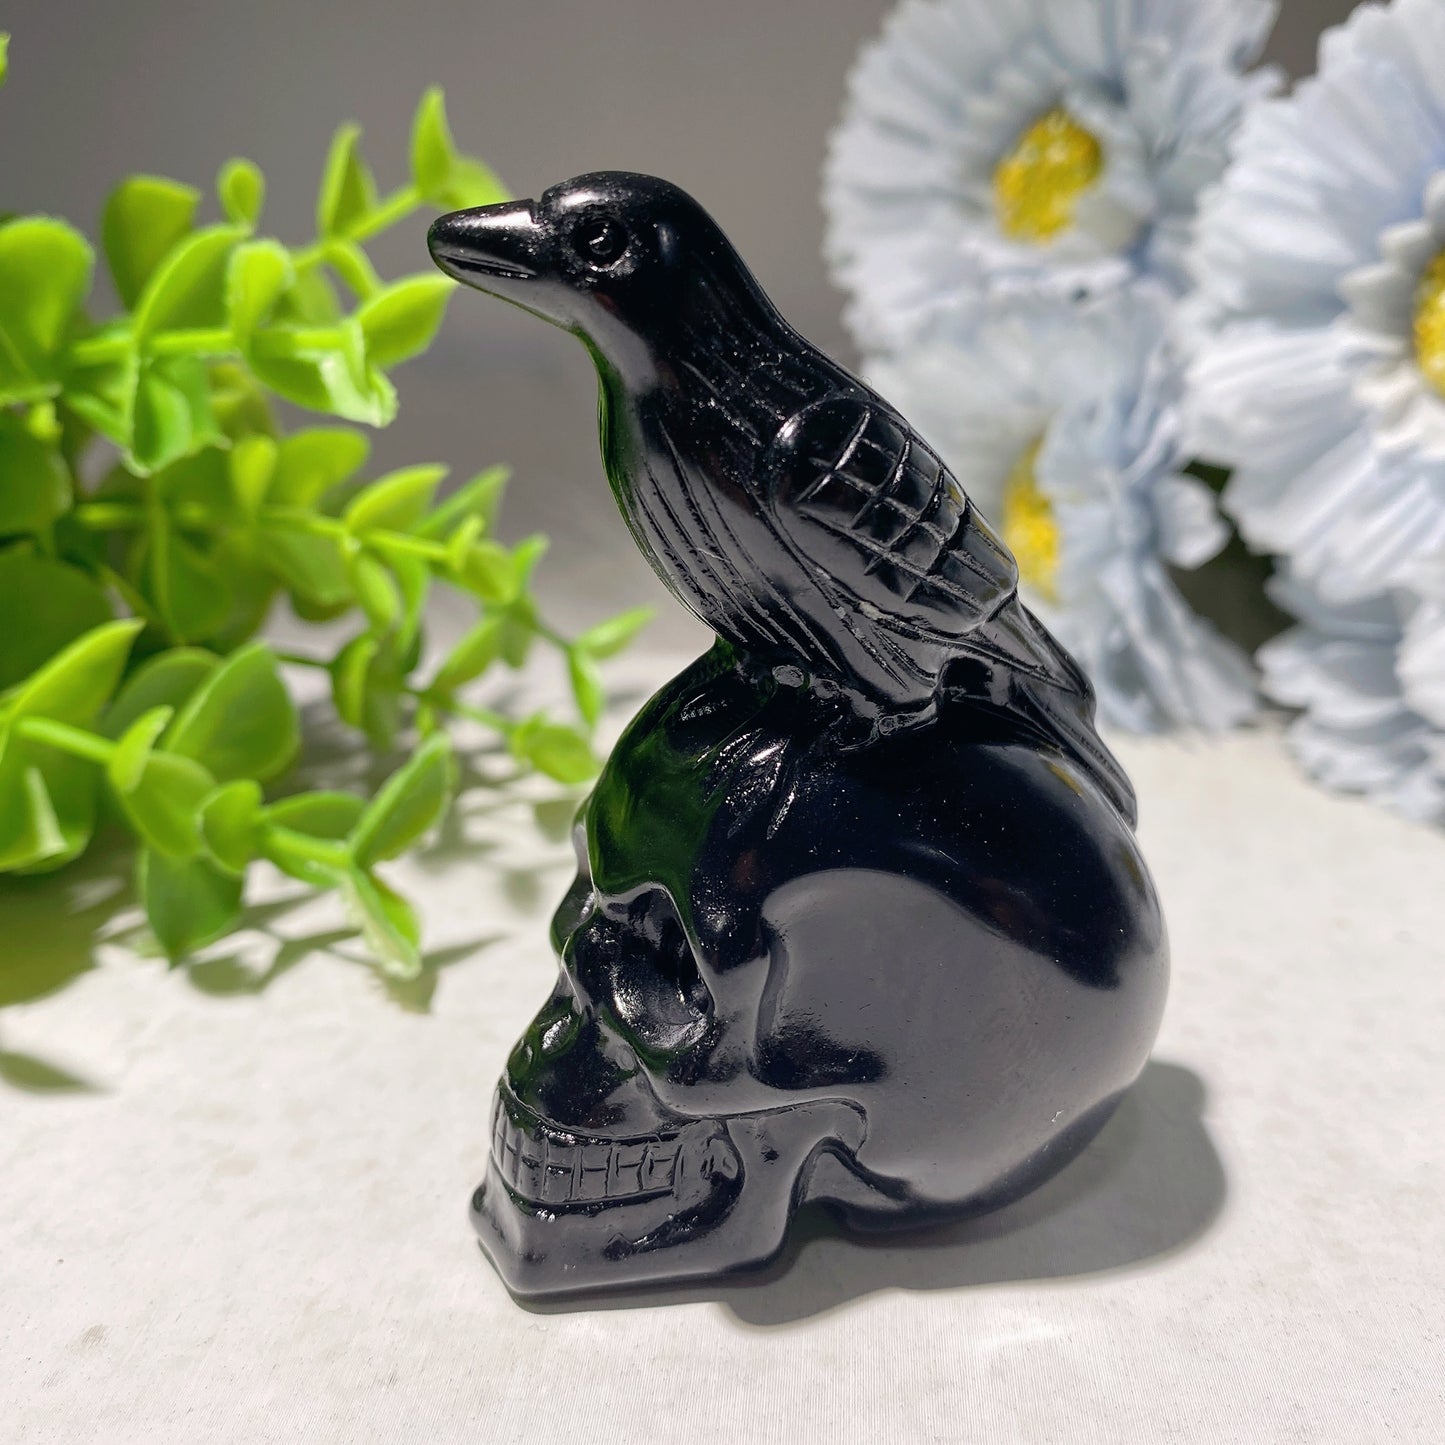 2.8" Black Obsidian Skull with Bird Carvings for Halloween Bulk Wholesale